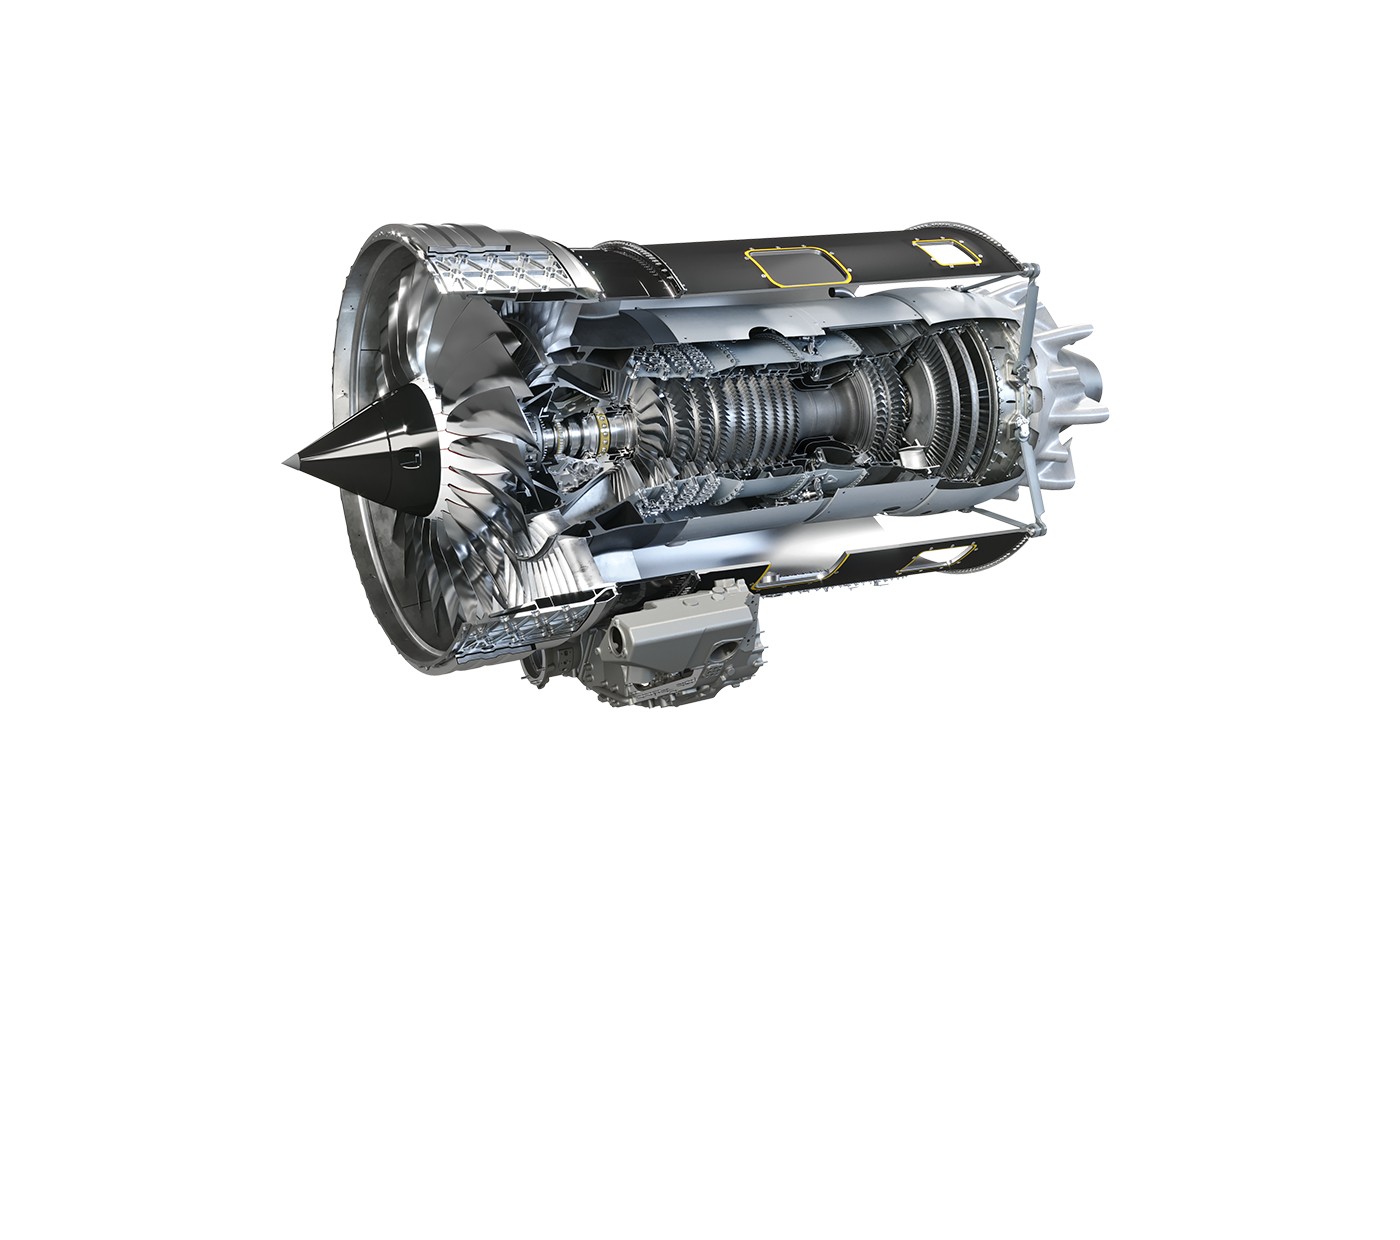 Rolls-Royce Pearl engine